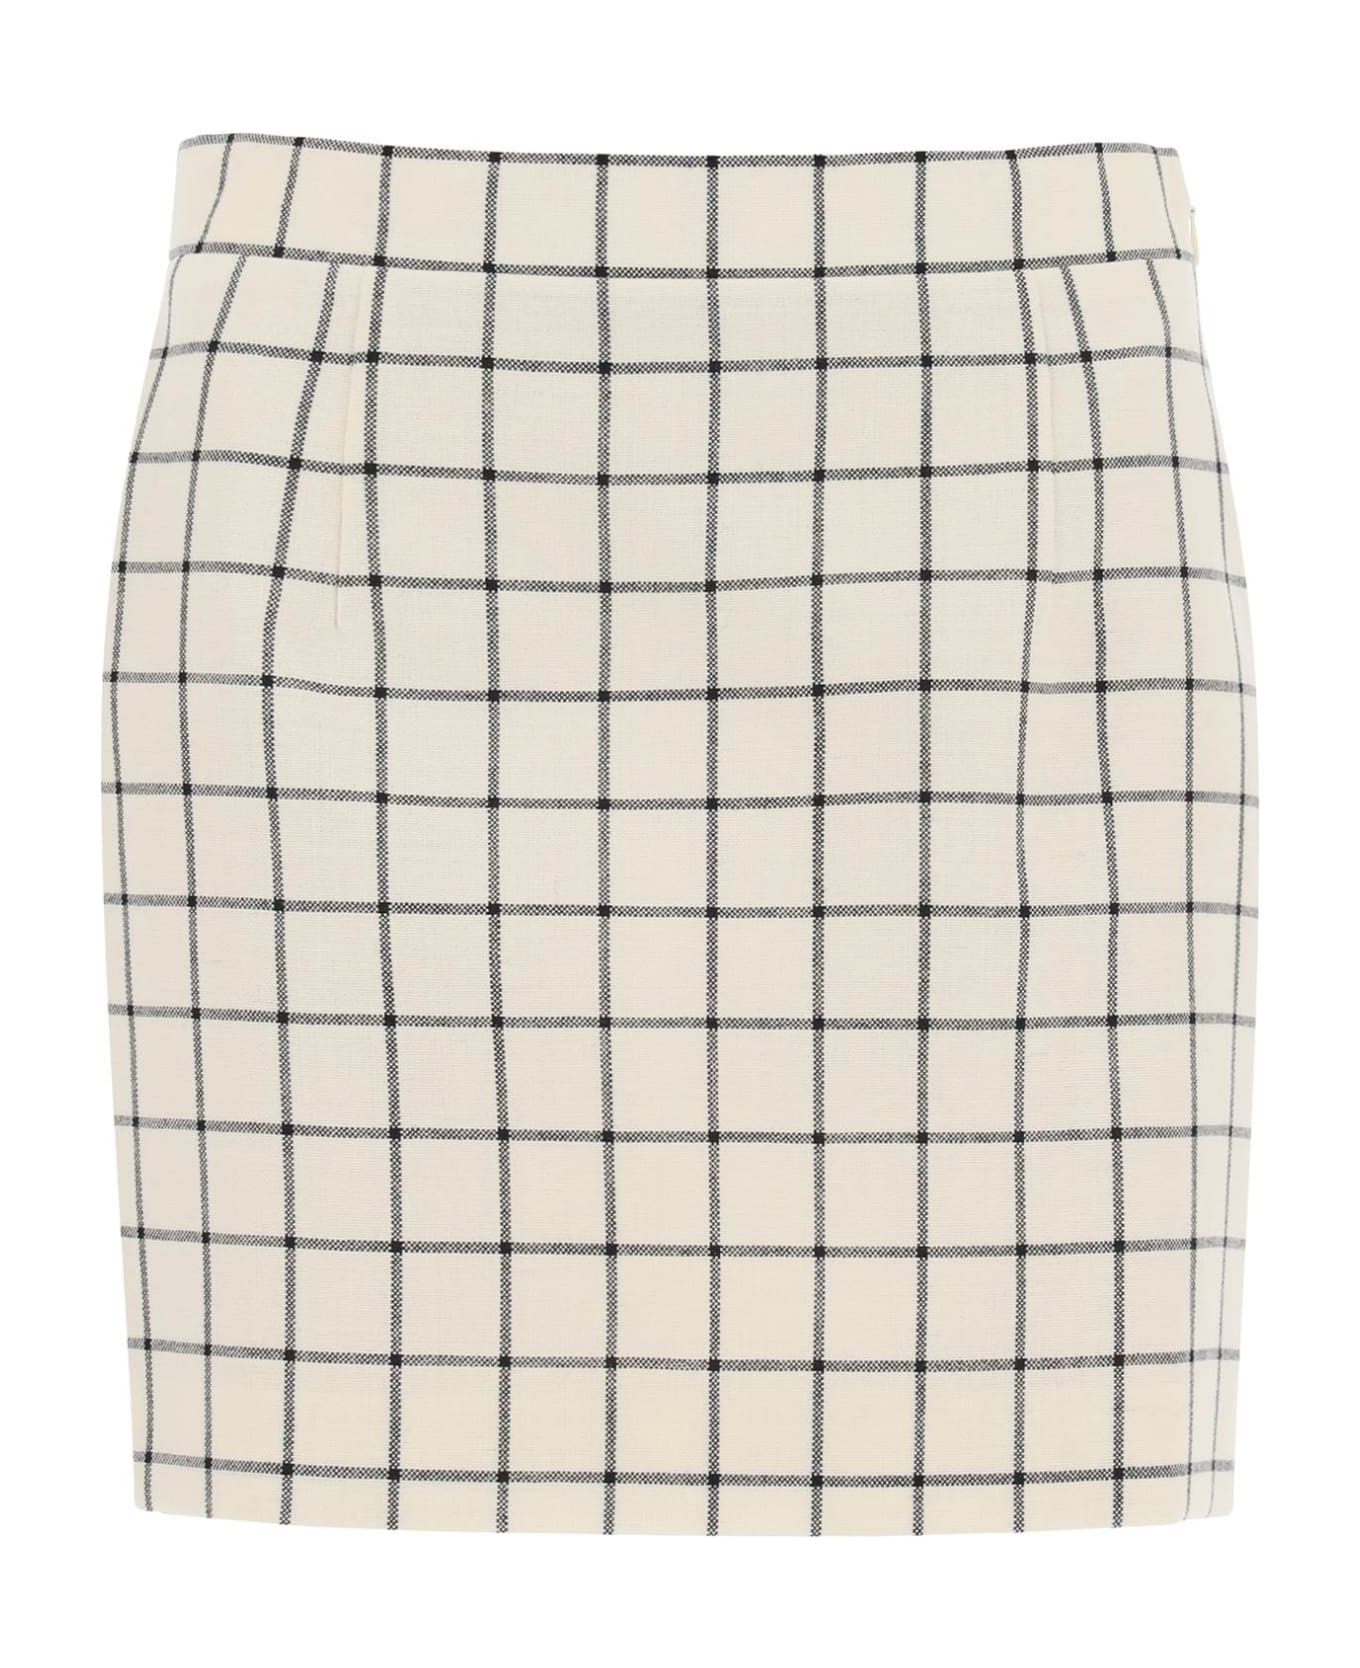 Marni Wool Check Skirt - Chw03